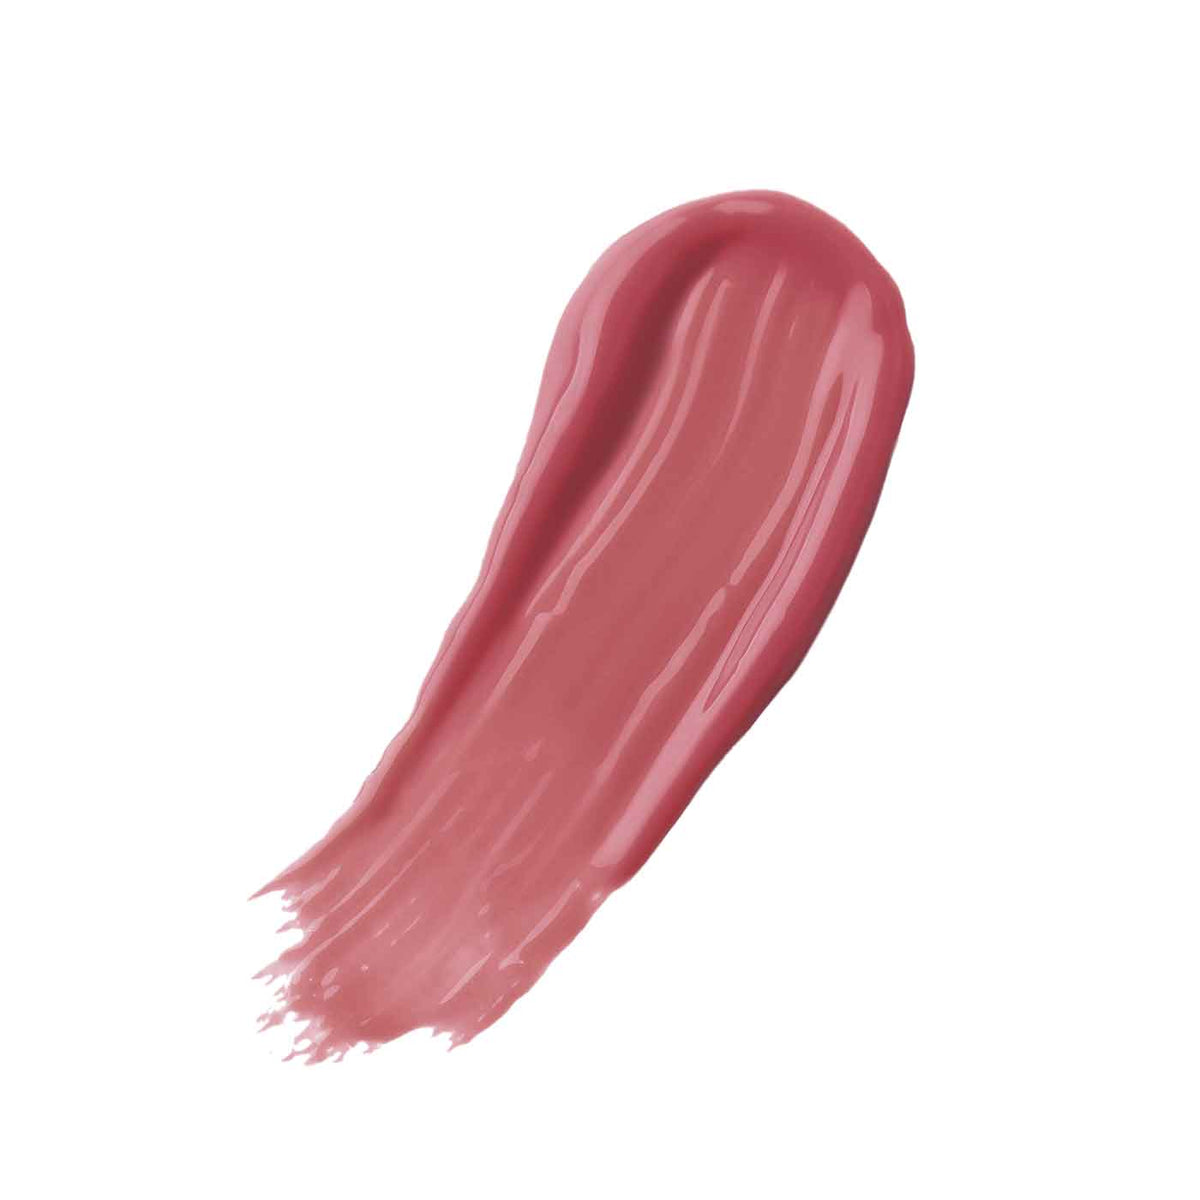 Longevity Lipstick - Perfect Blush